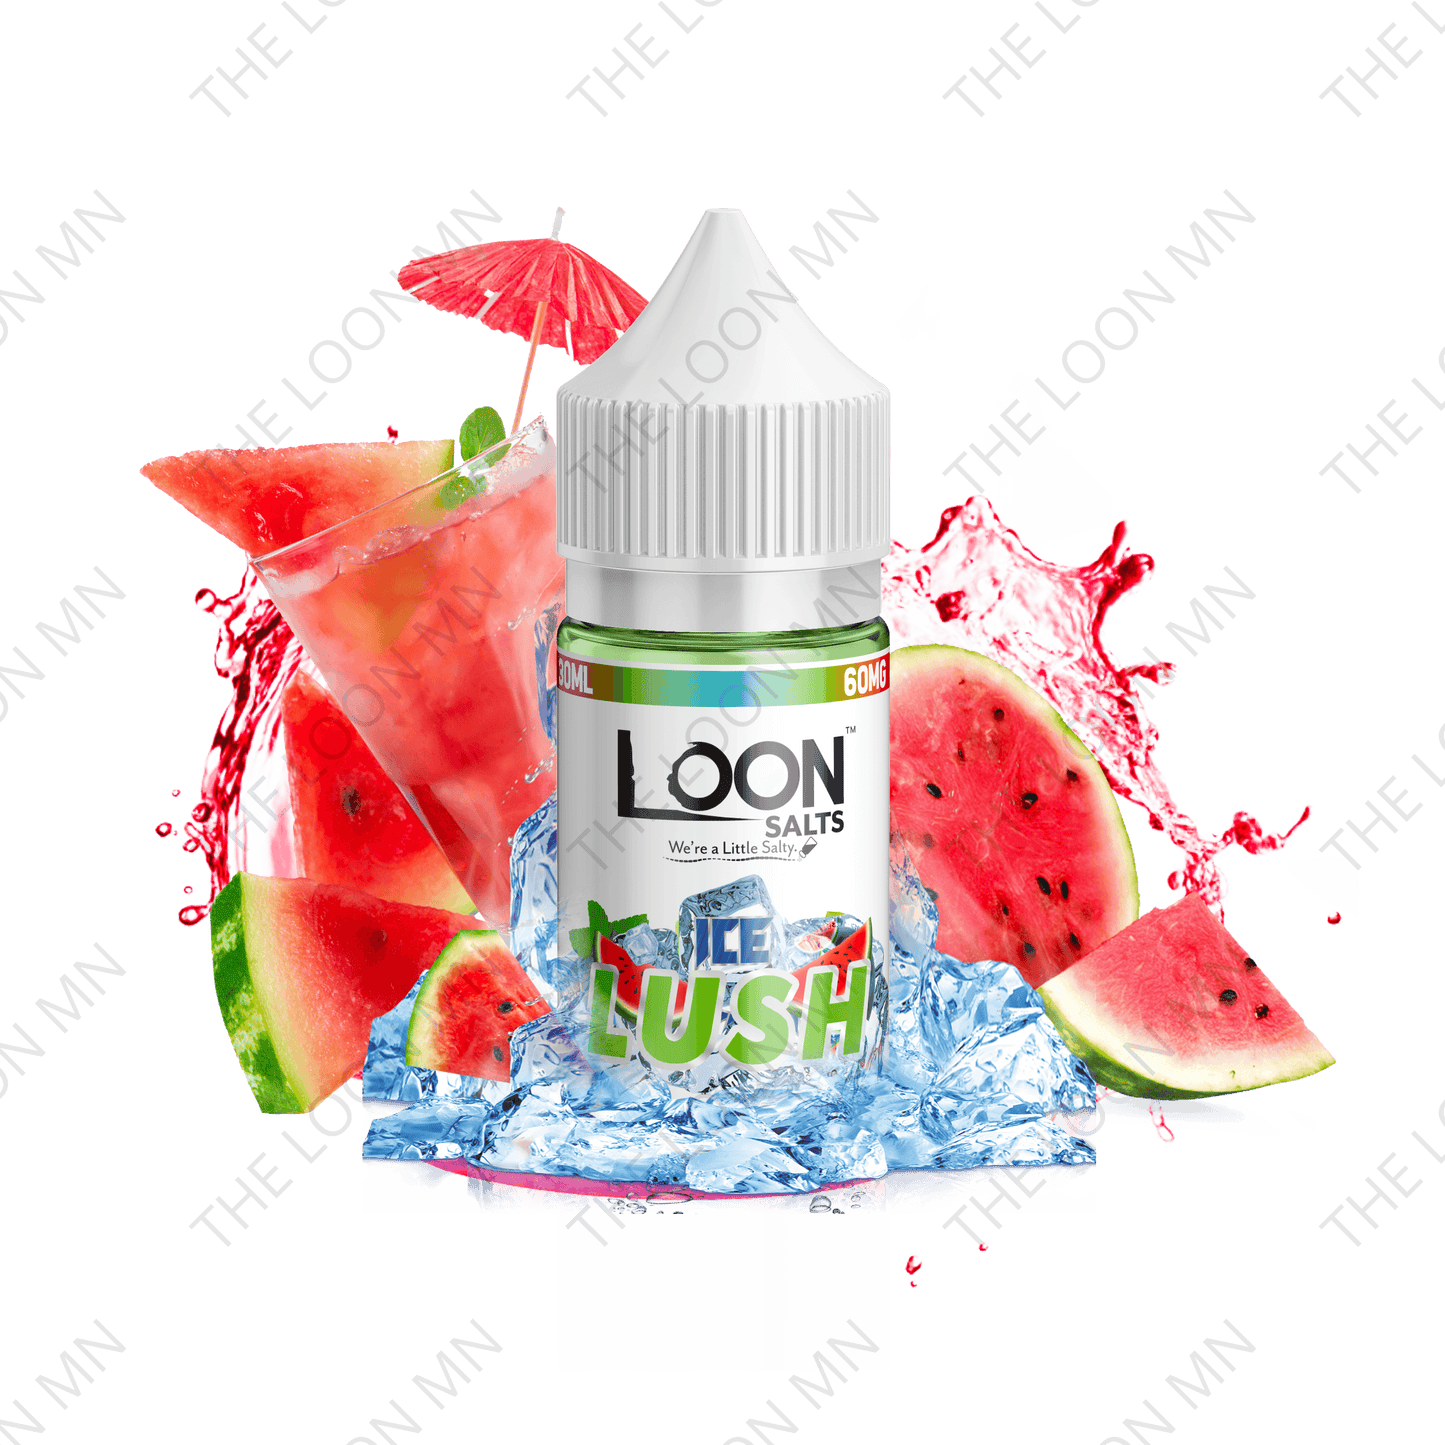 LOON SALTS - ICED LUSH - THE LOON